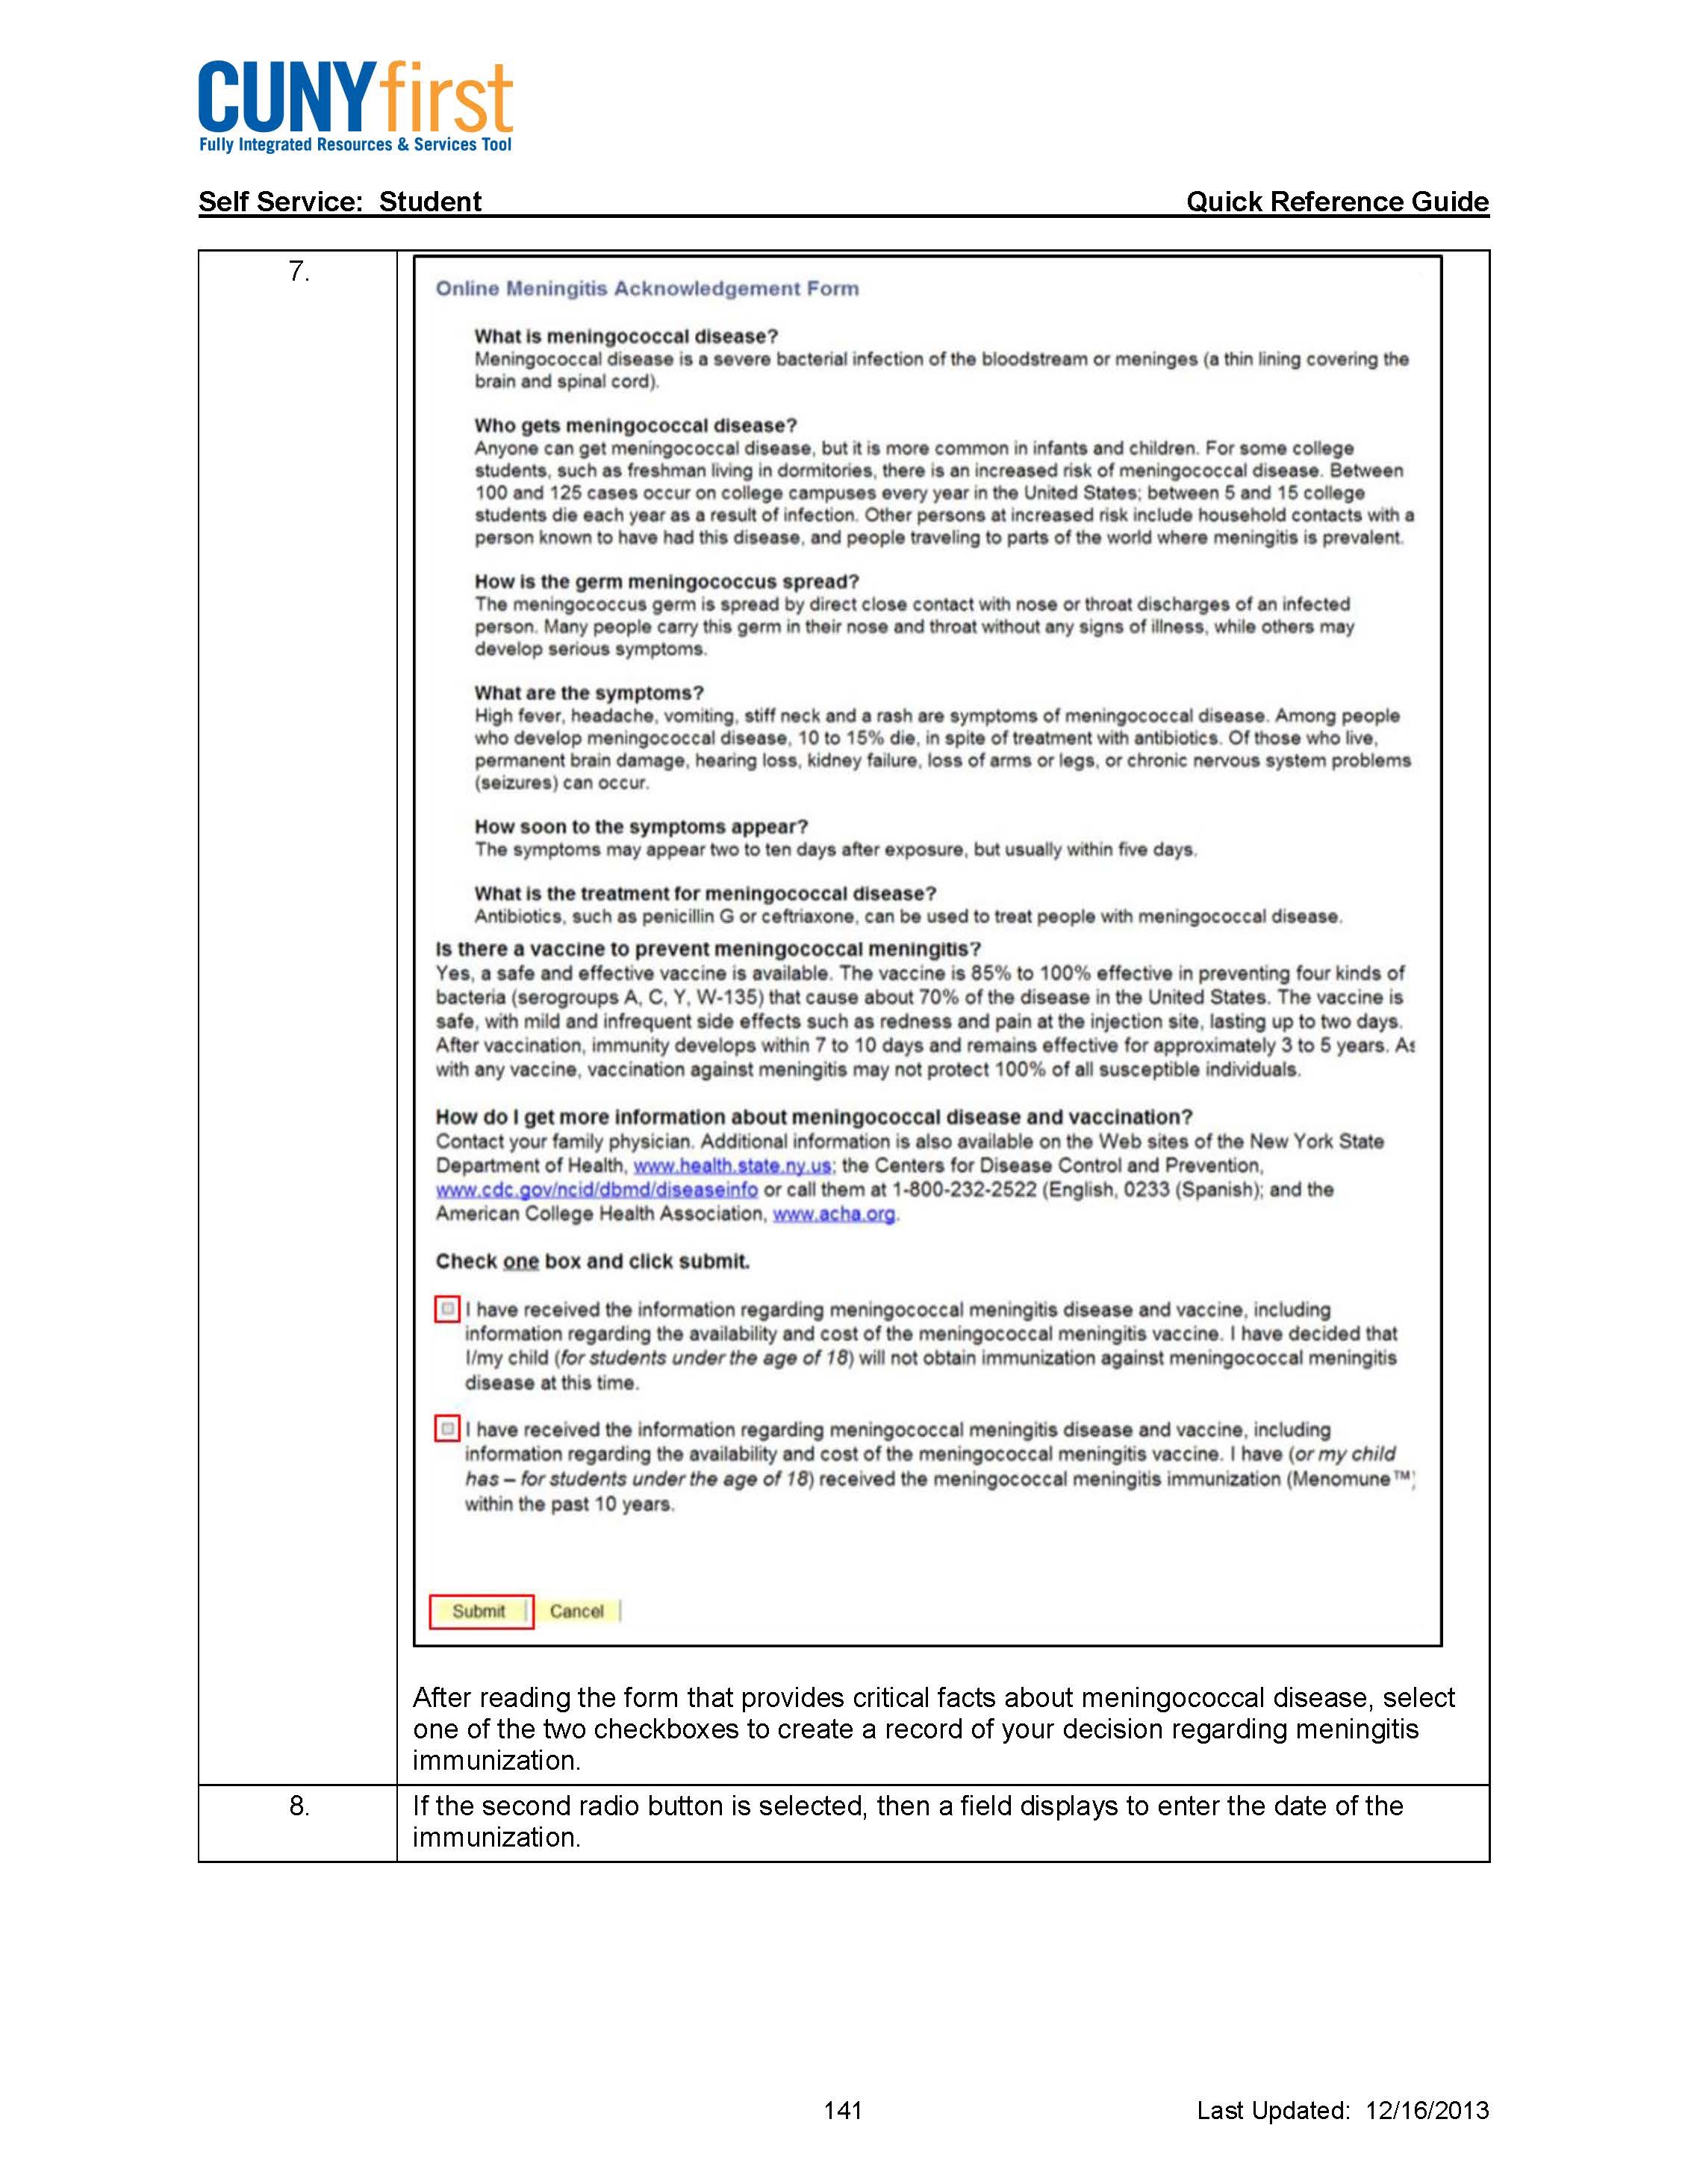 Submit Immunization/Meningitis Acknowledgment Form 2